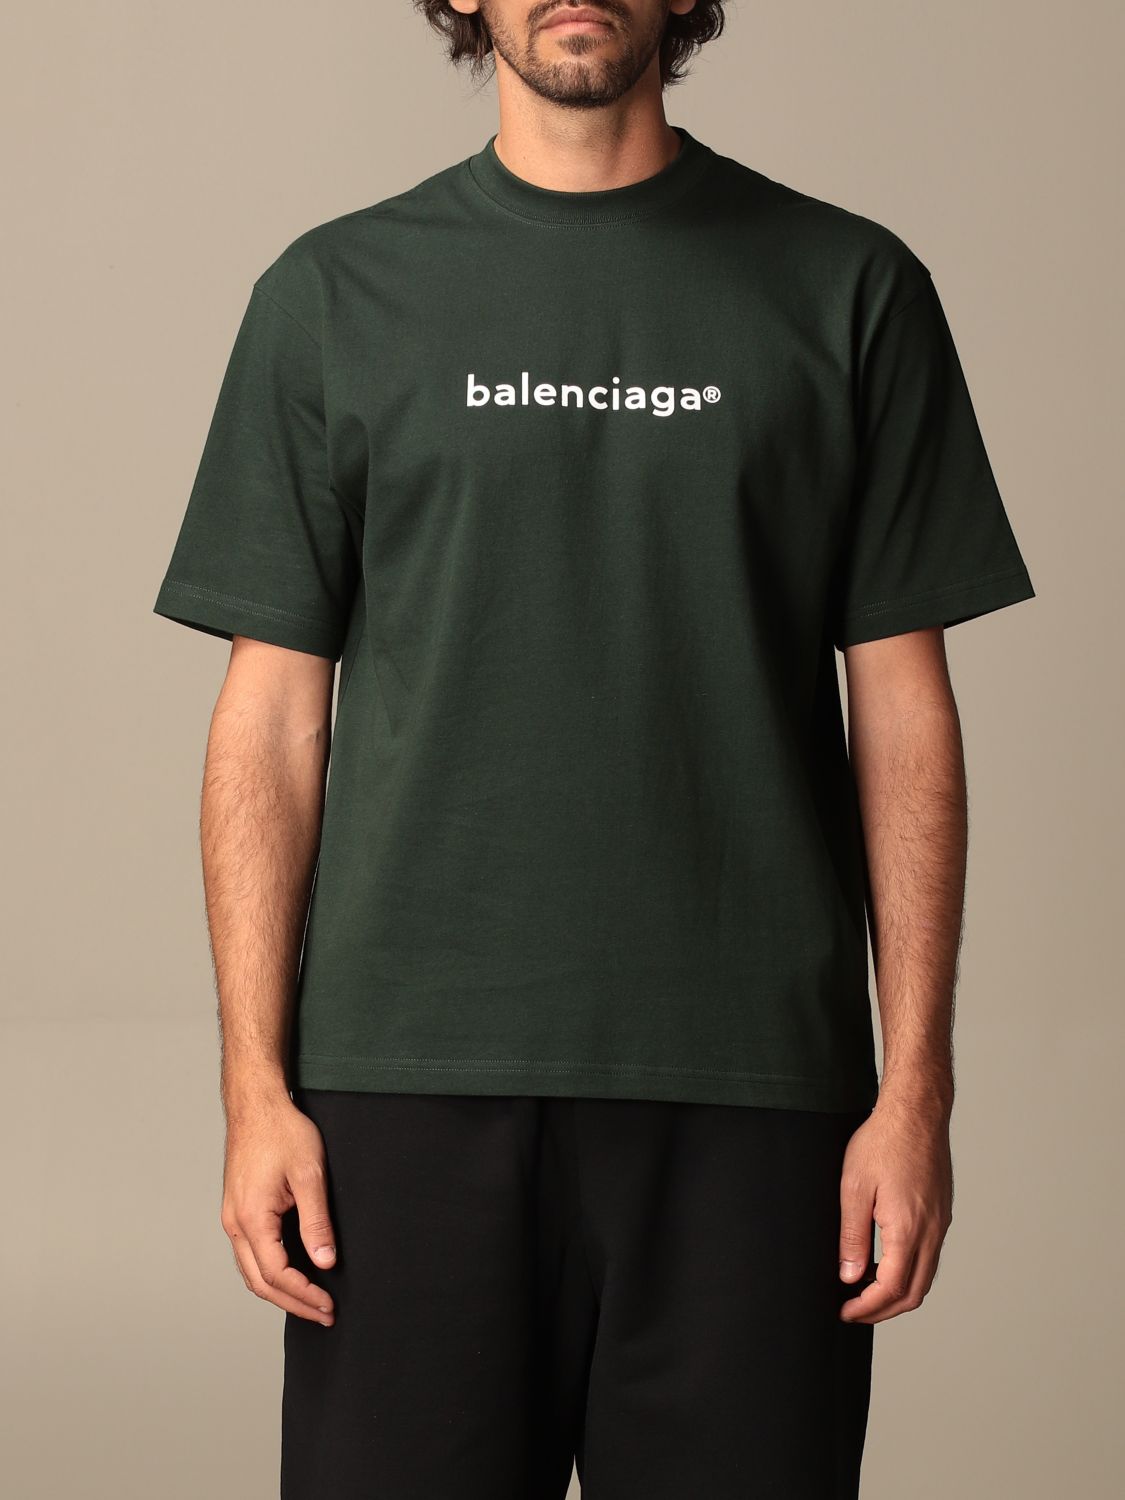 BALENCIAGA: T-shirt homme | T-Shirt Balenciaga Homme Vert | T-Shirt